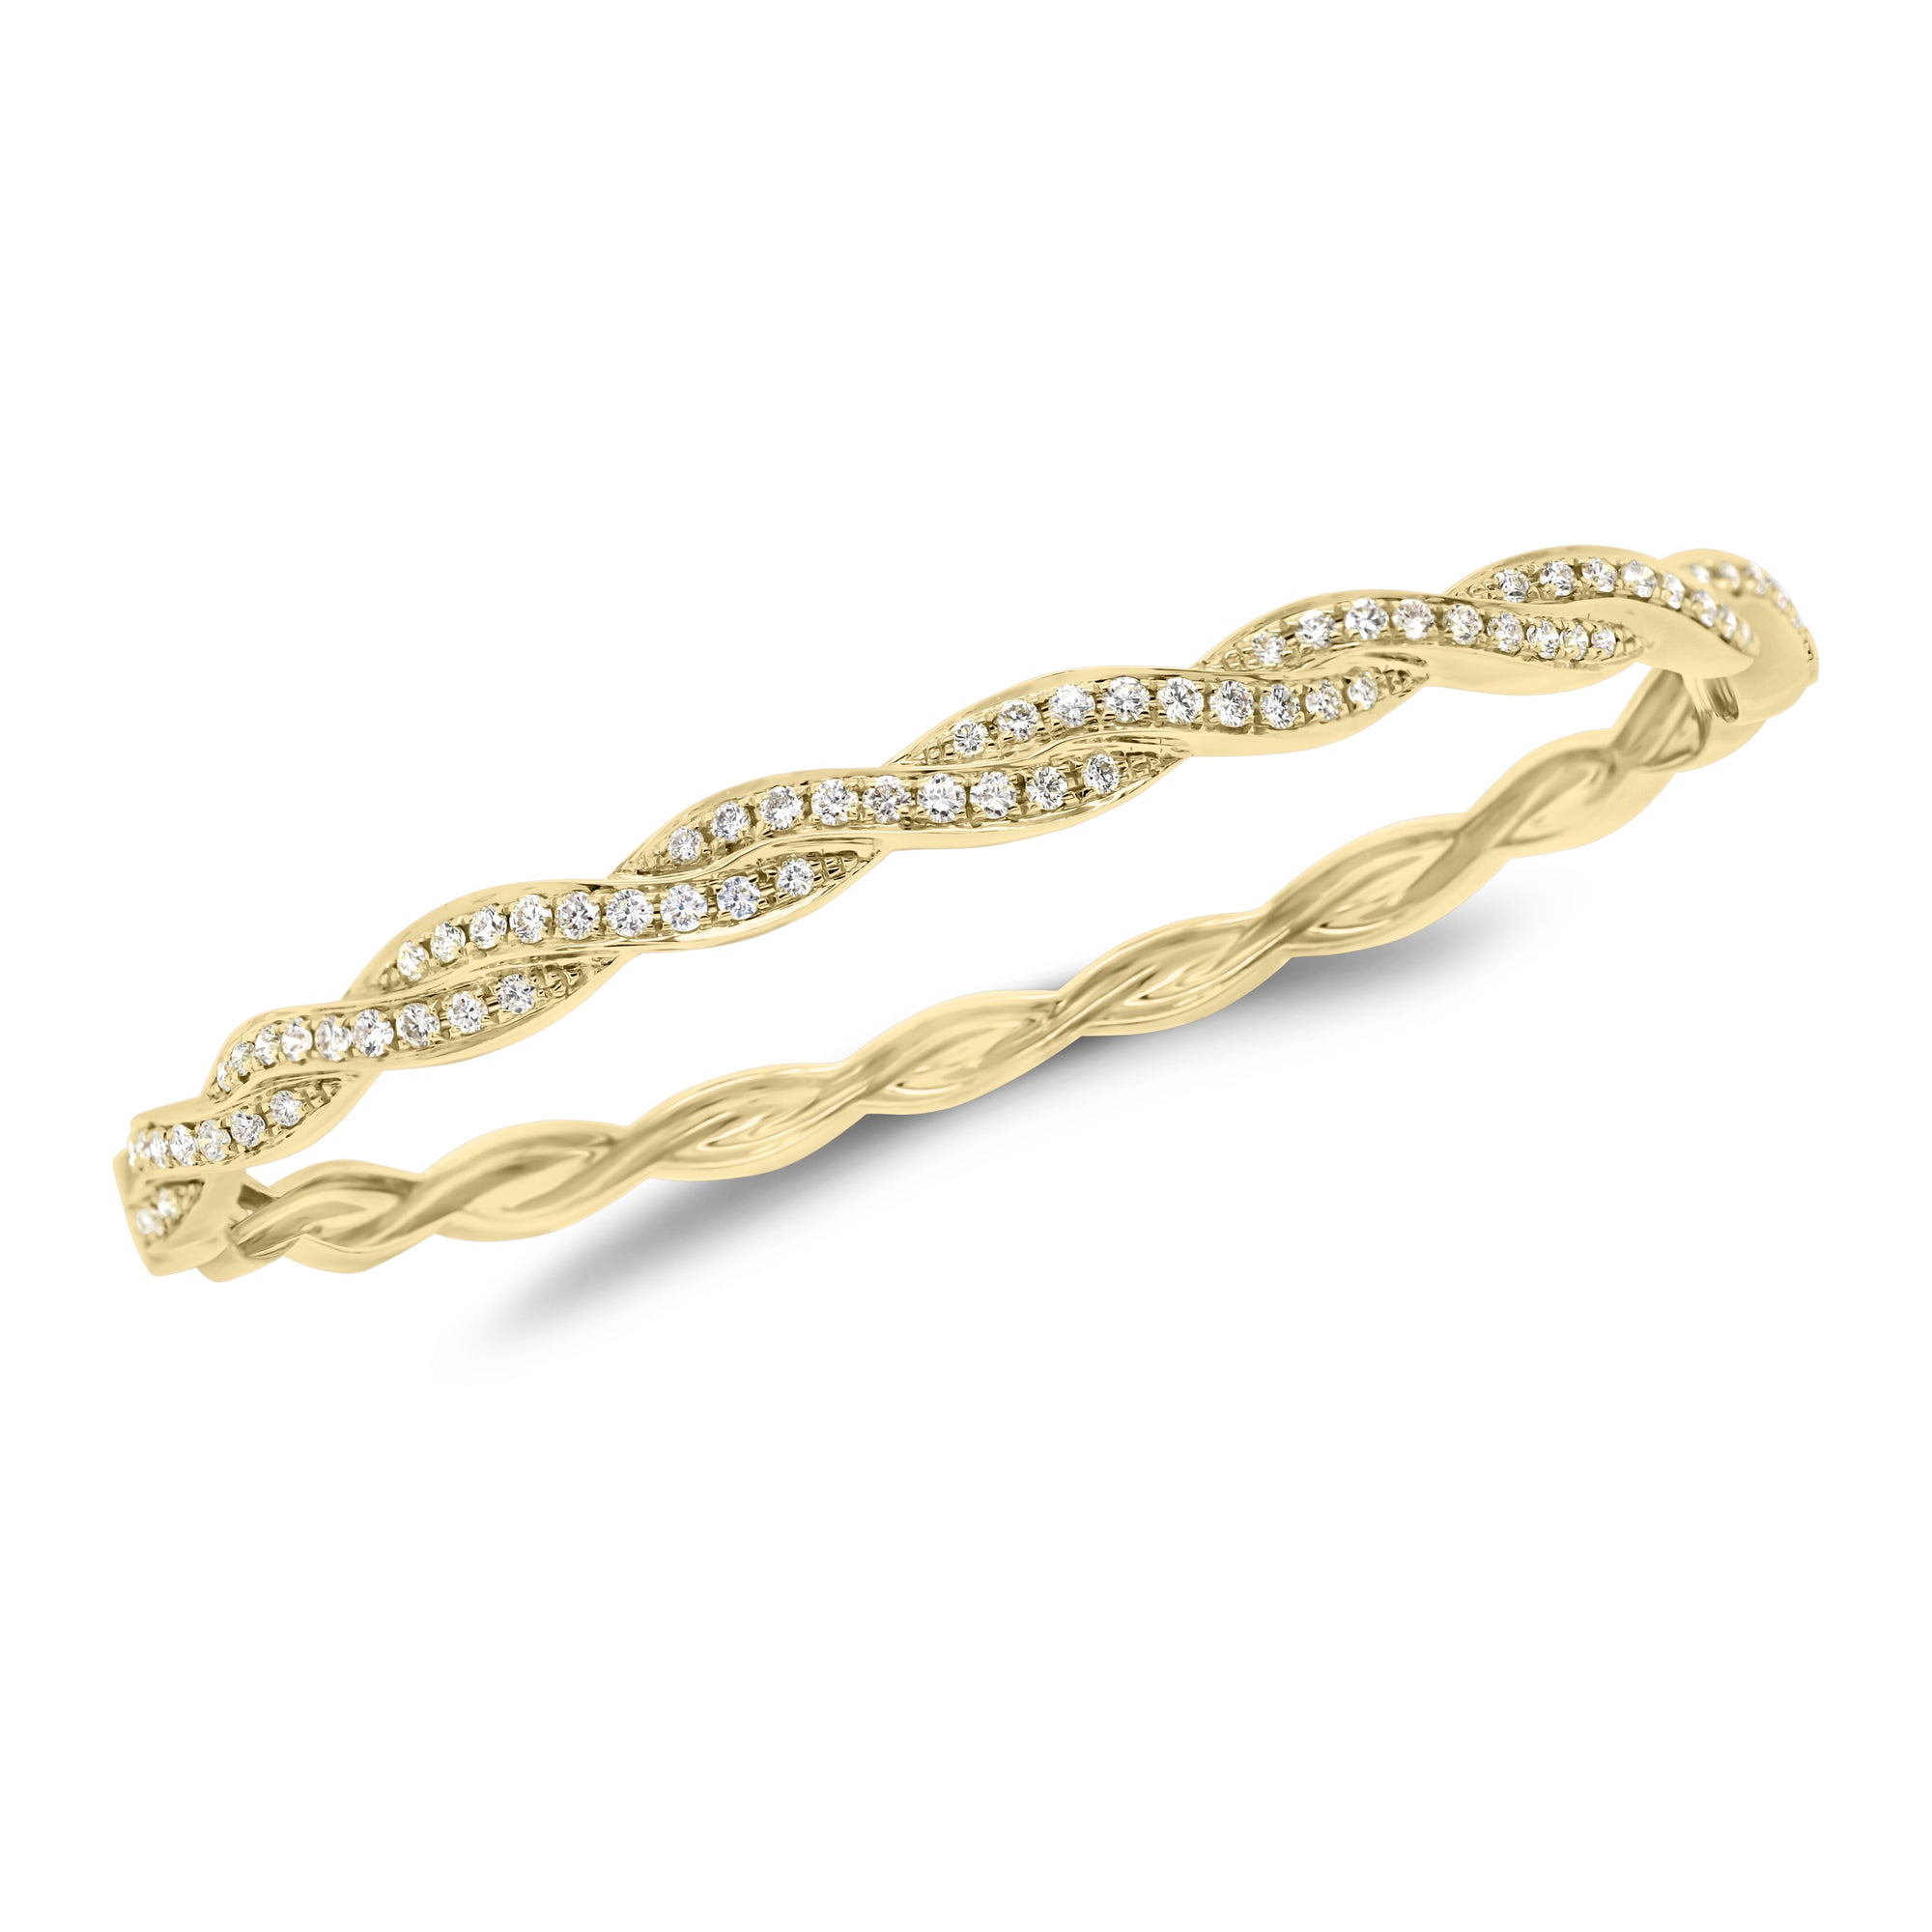 Diamond Woven Bangle Bracelet - 14K yellow gold weighing 13.1 grams - 78 round diamonds totaling 0.93 carats